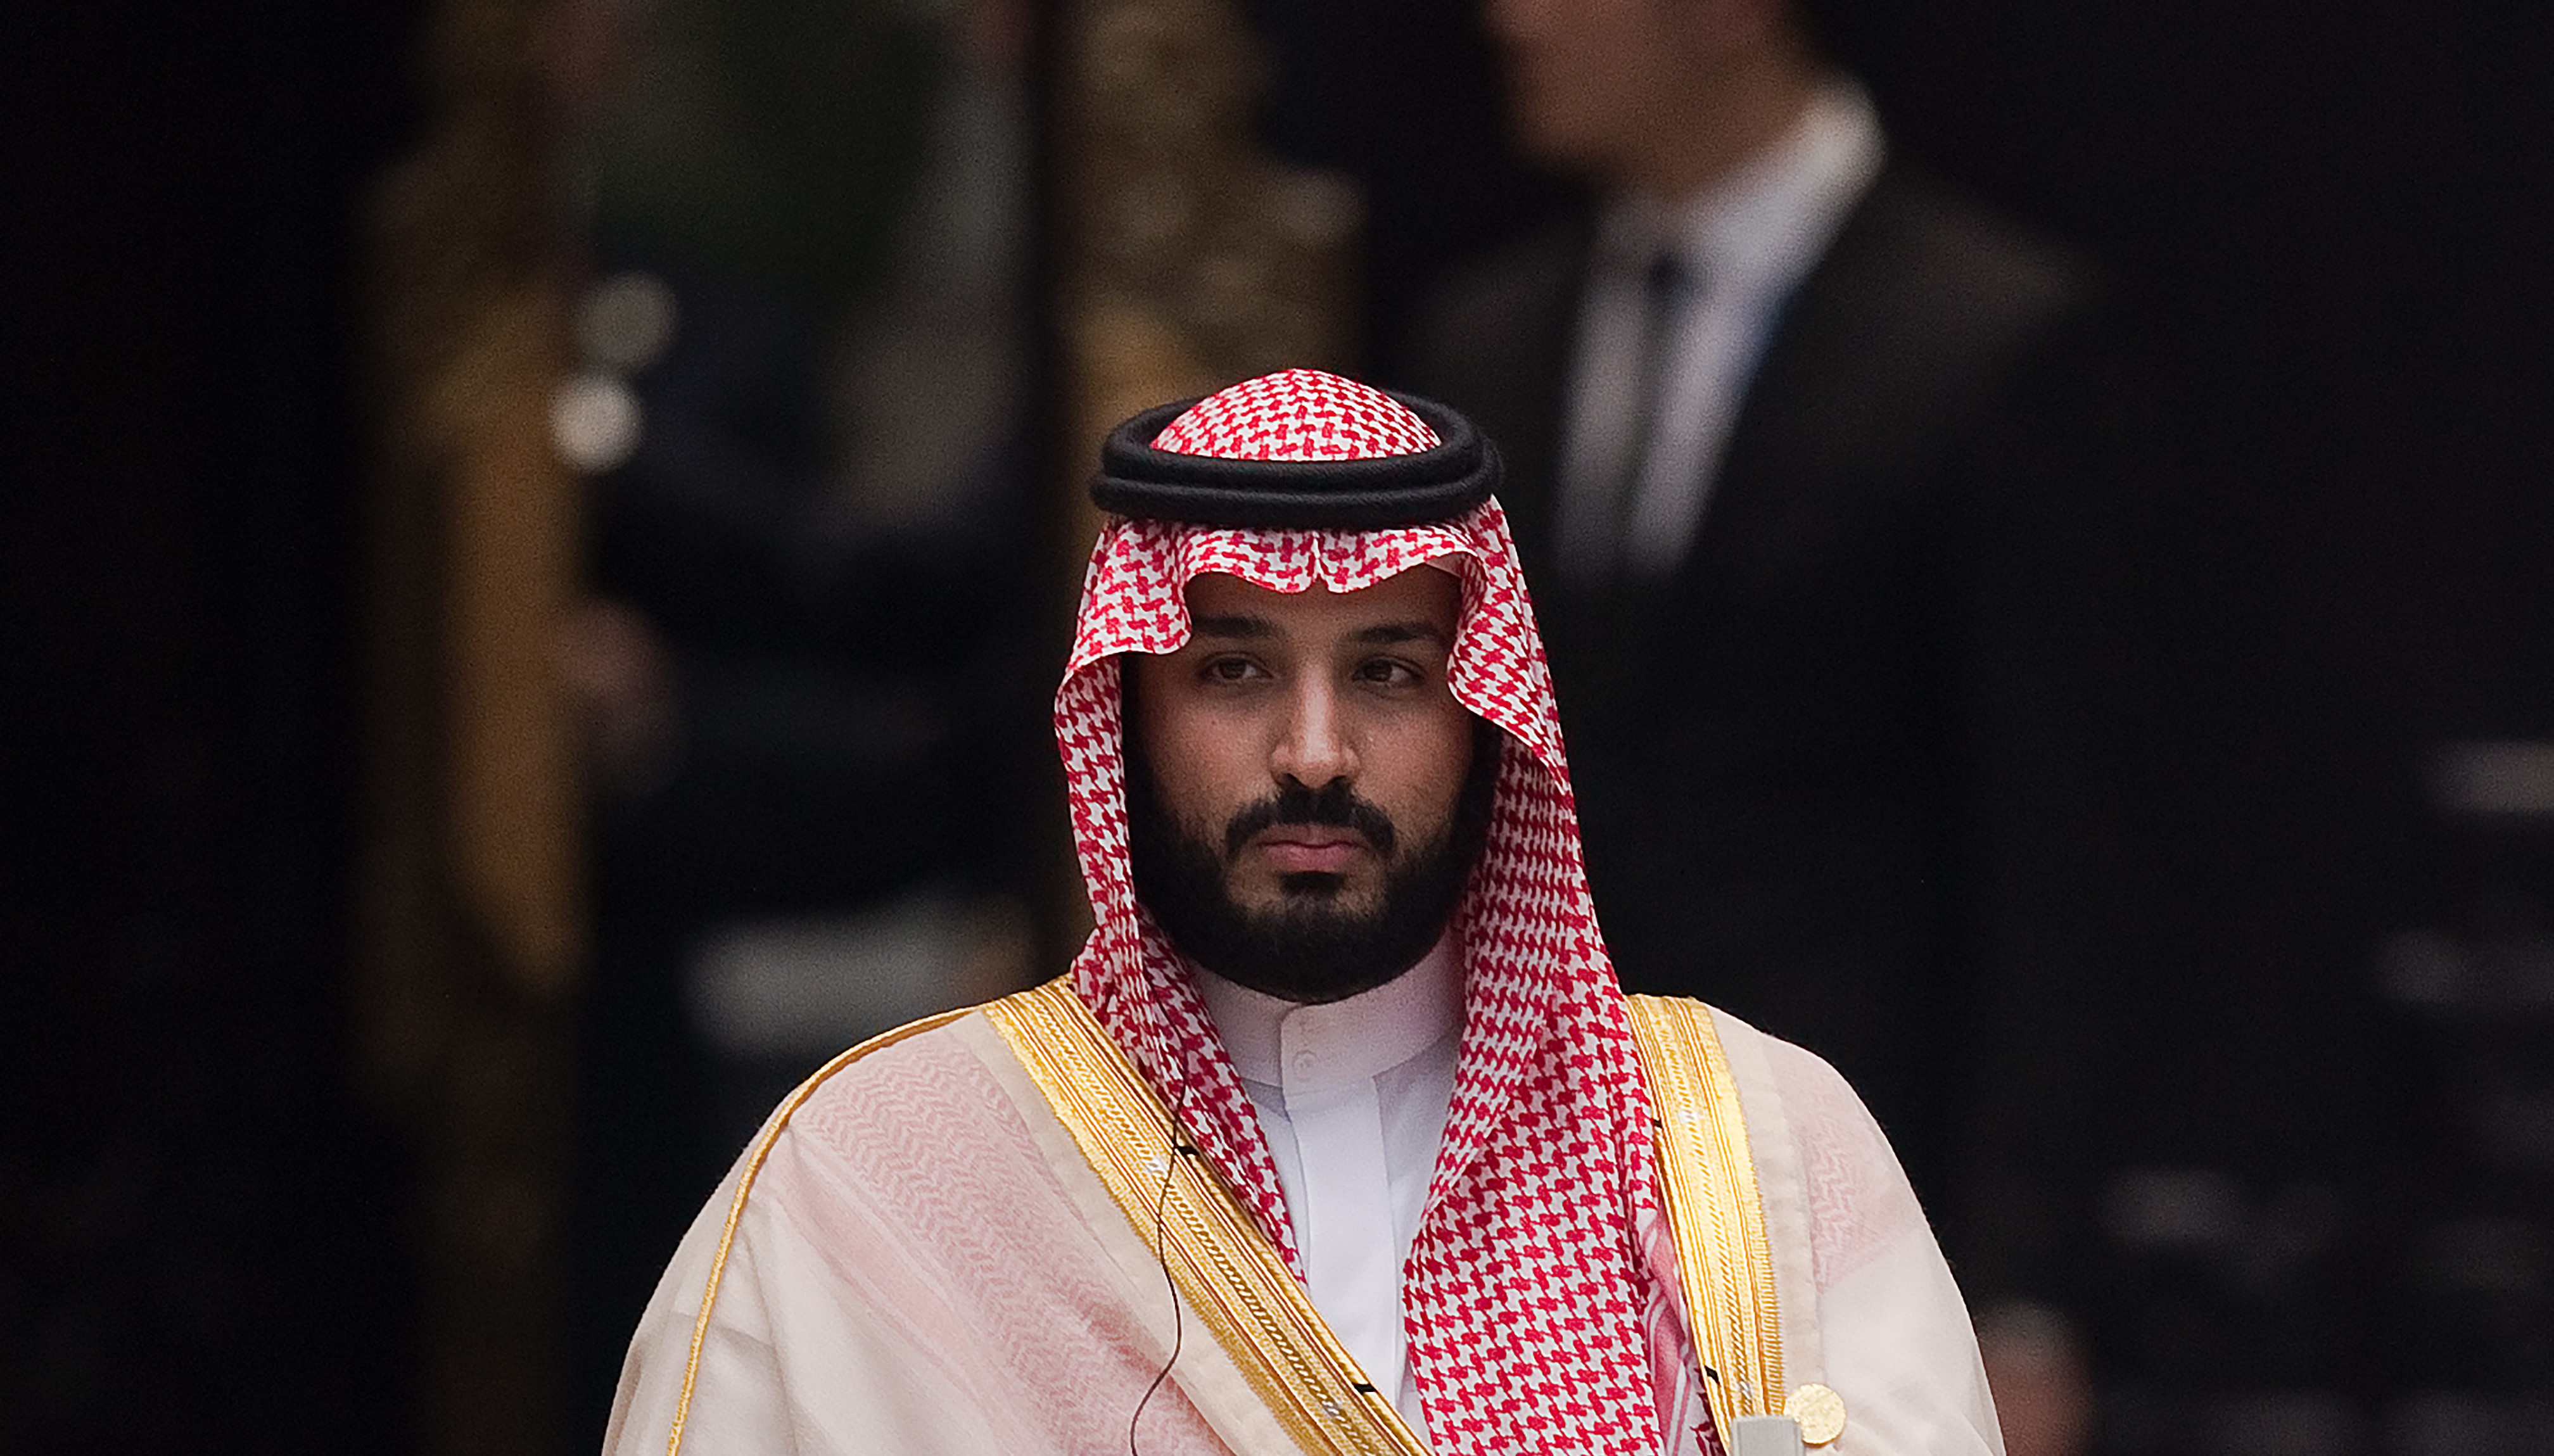 Принцы аль сауды. Мухаммед ибн Салман Аль Сауд. Принц Саудовской Аравии Мухаммед. Саудовский принц Мухаммед Бен Салман. Наследный принц Саудовской Аравии Мухаммед Бин Салман.